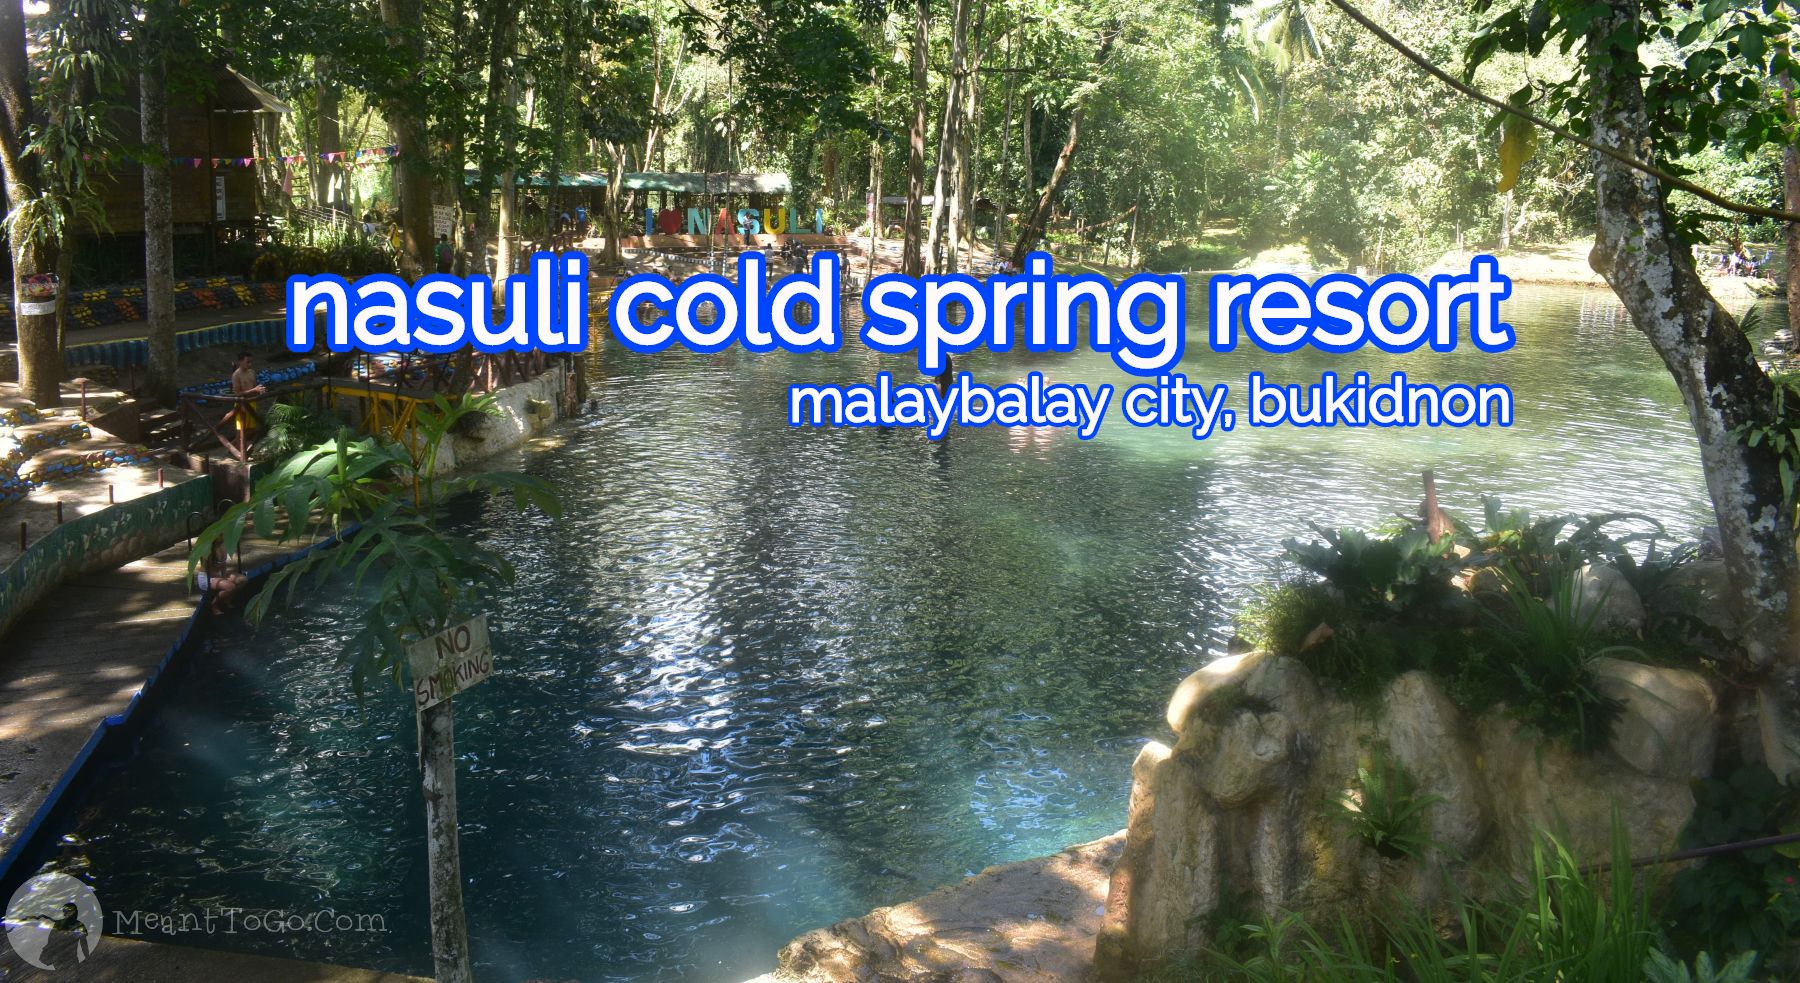 Nasuli Cold Spring Resort – A Refreshing Destination In Malaybalay City, Bukidnon